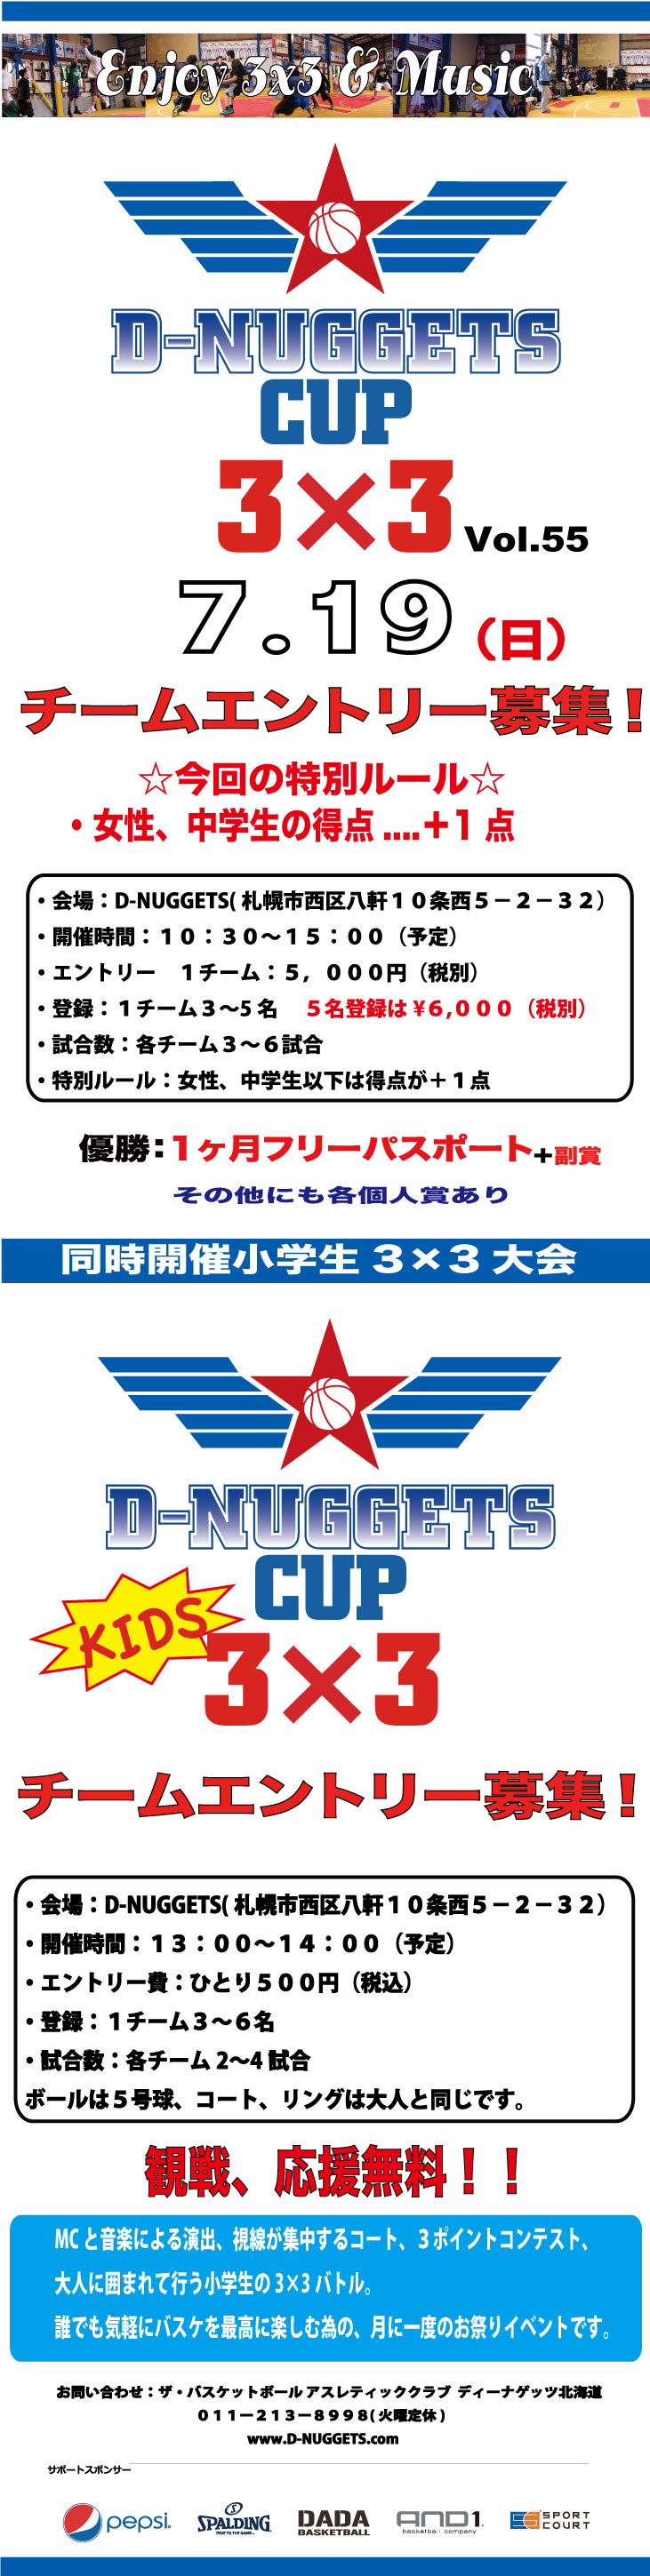 D-NUGGETS-CUP-HOKKAIDO-Vol55.jpg